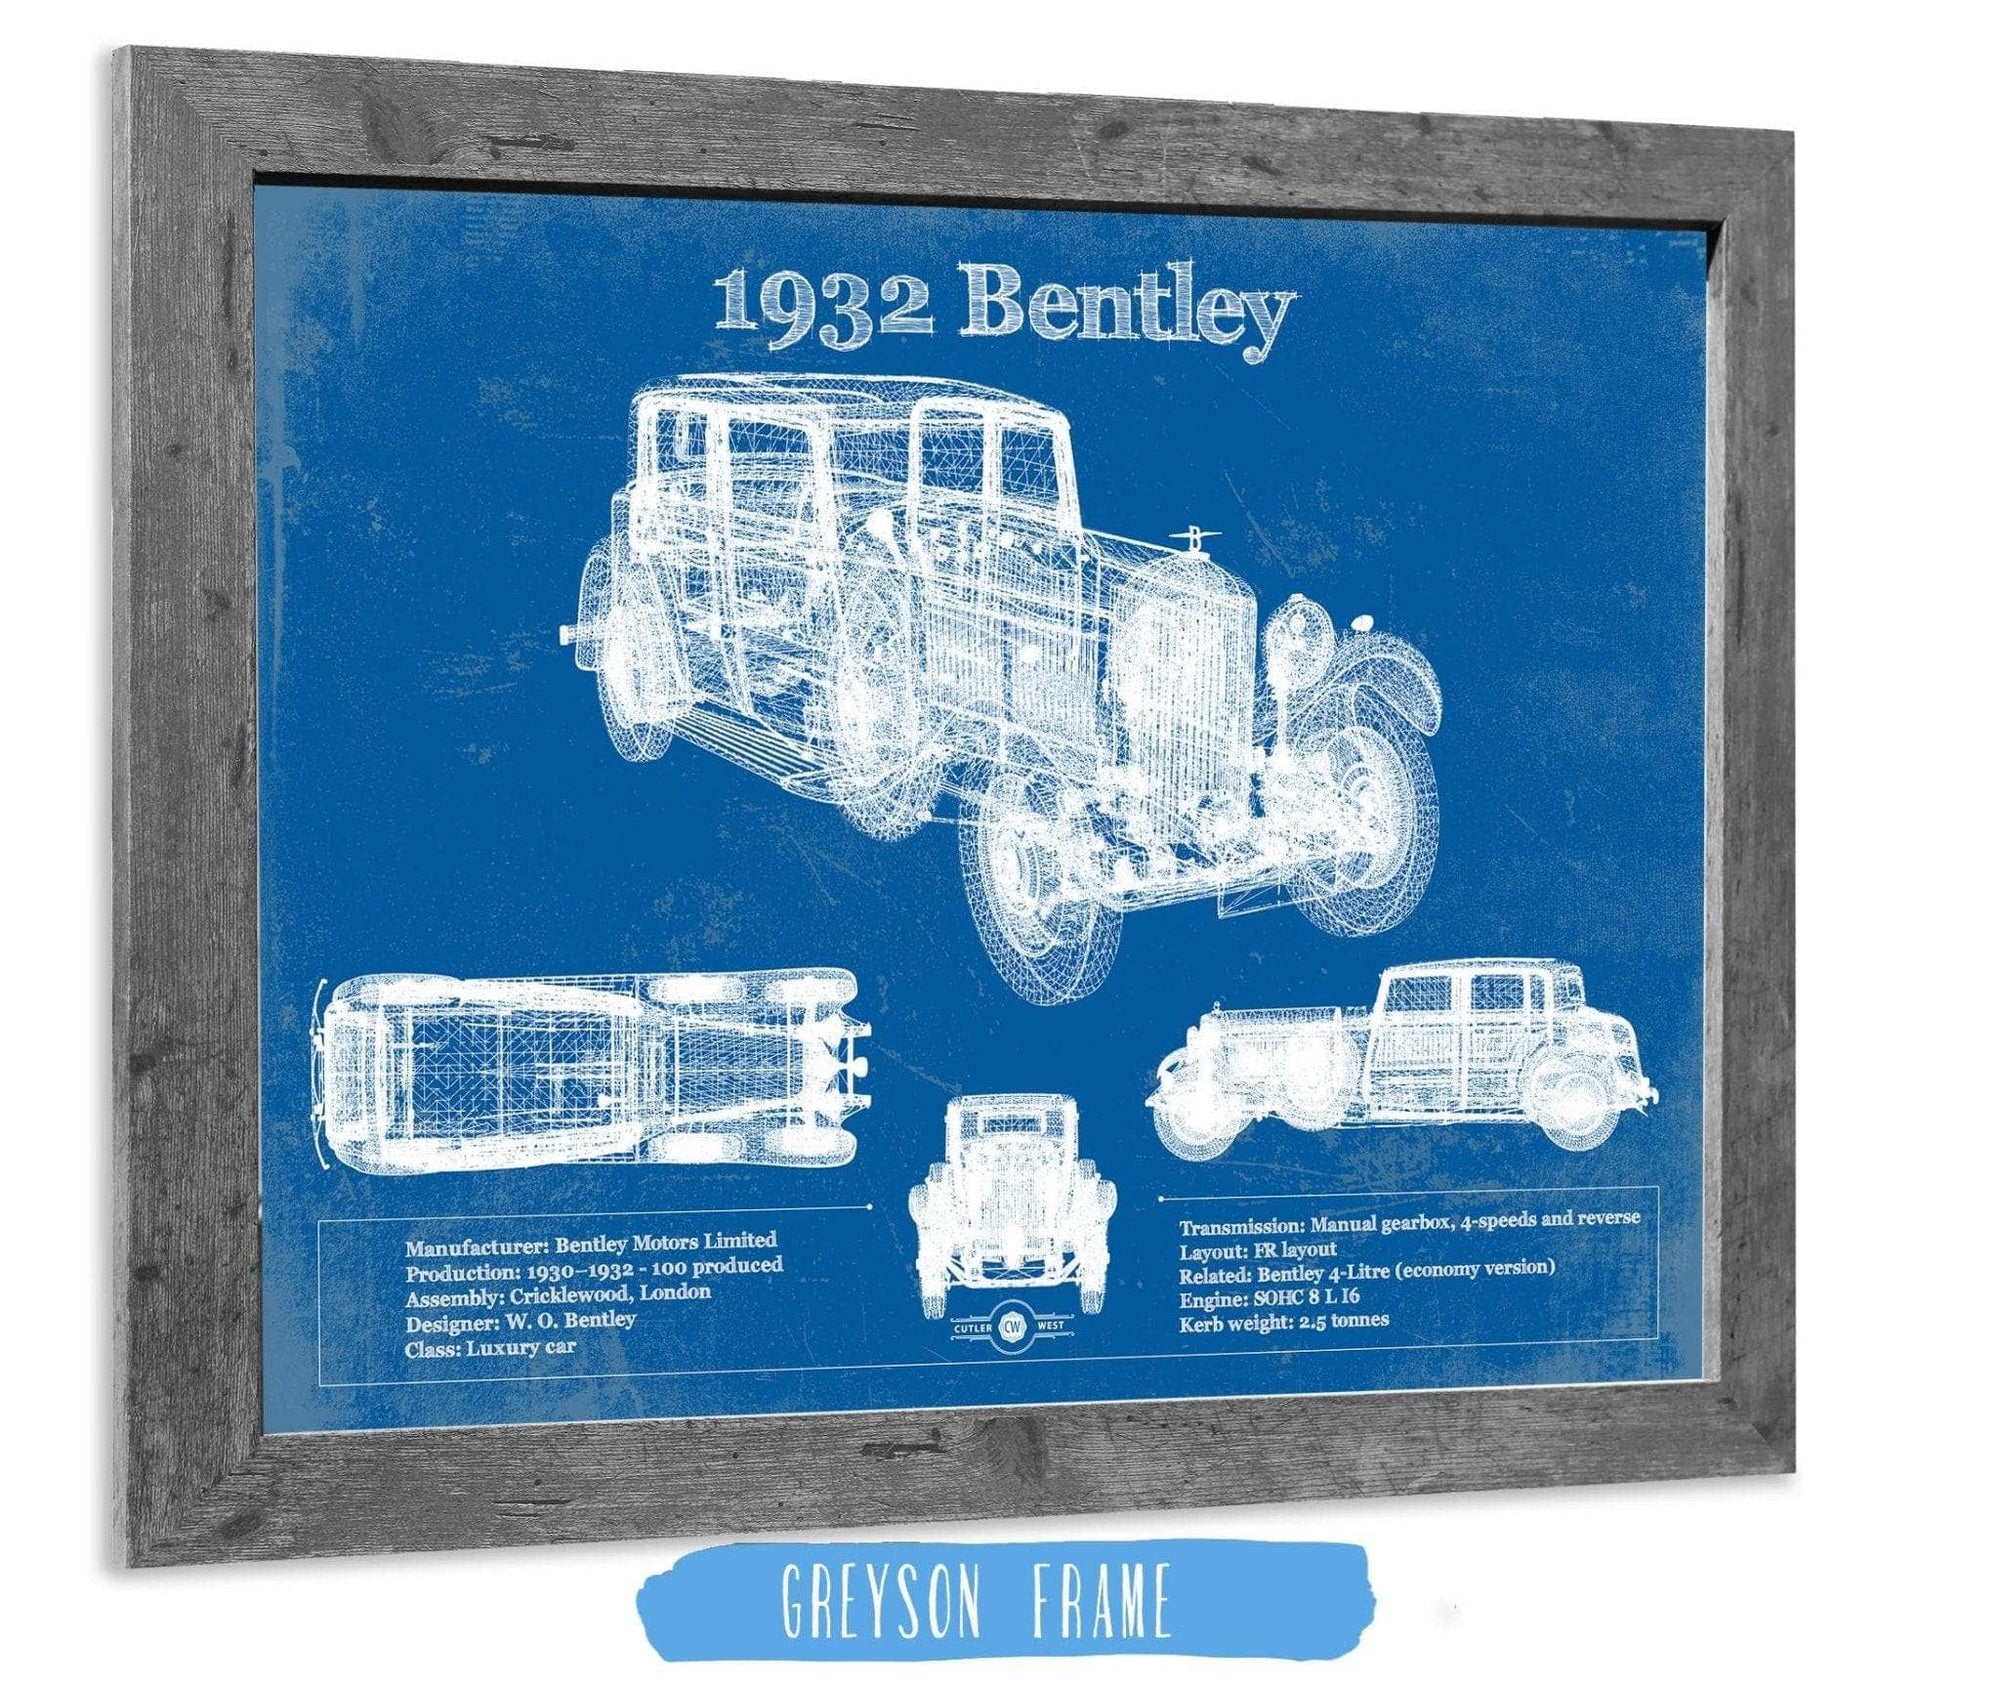 Cutler West Vehicle Collection 1932 Bentley Vintage Blueprint Auto Print